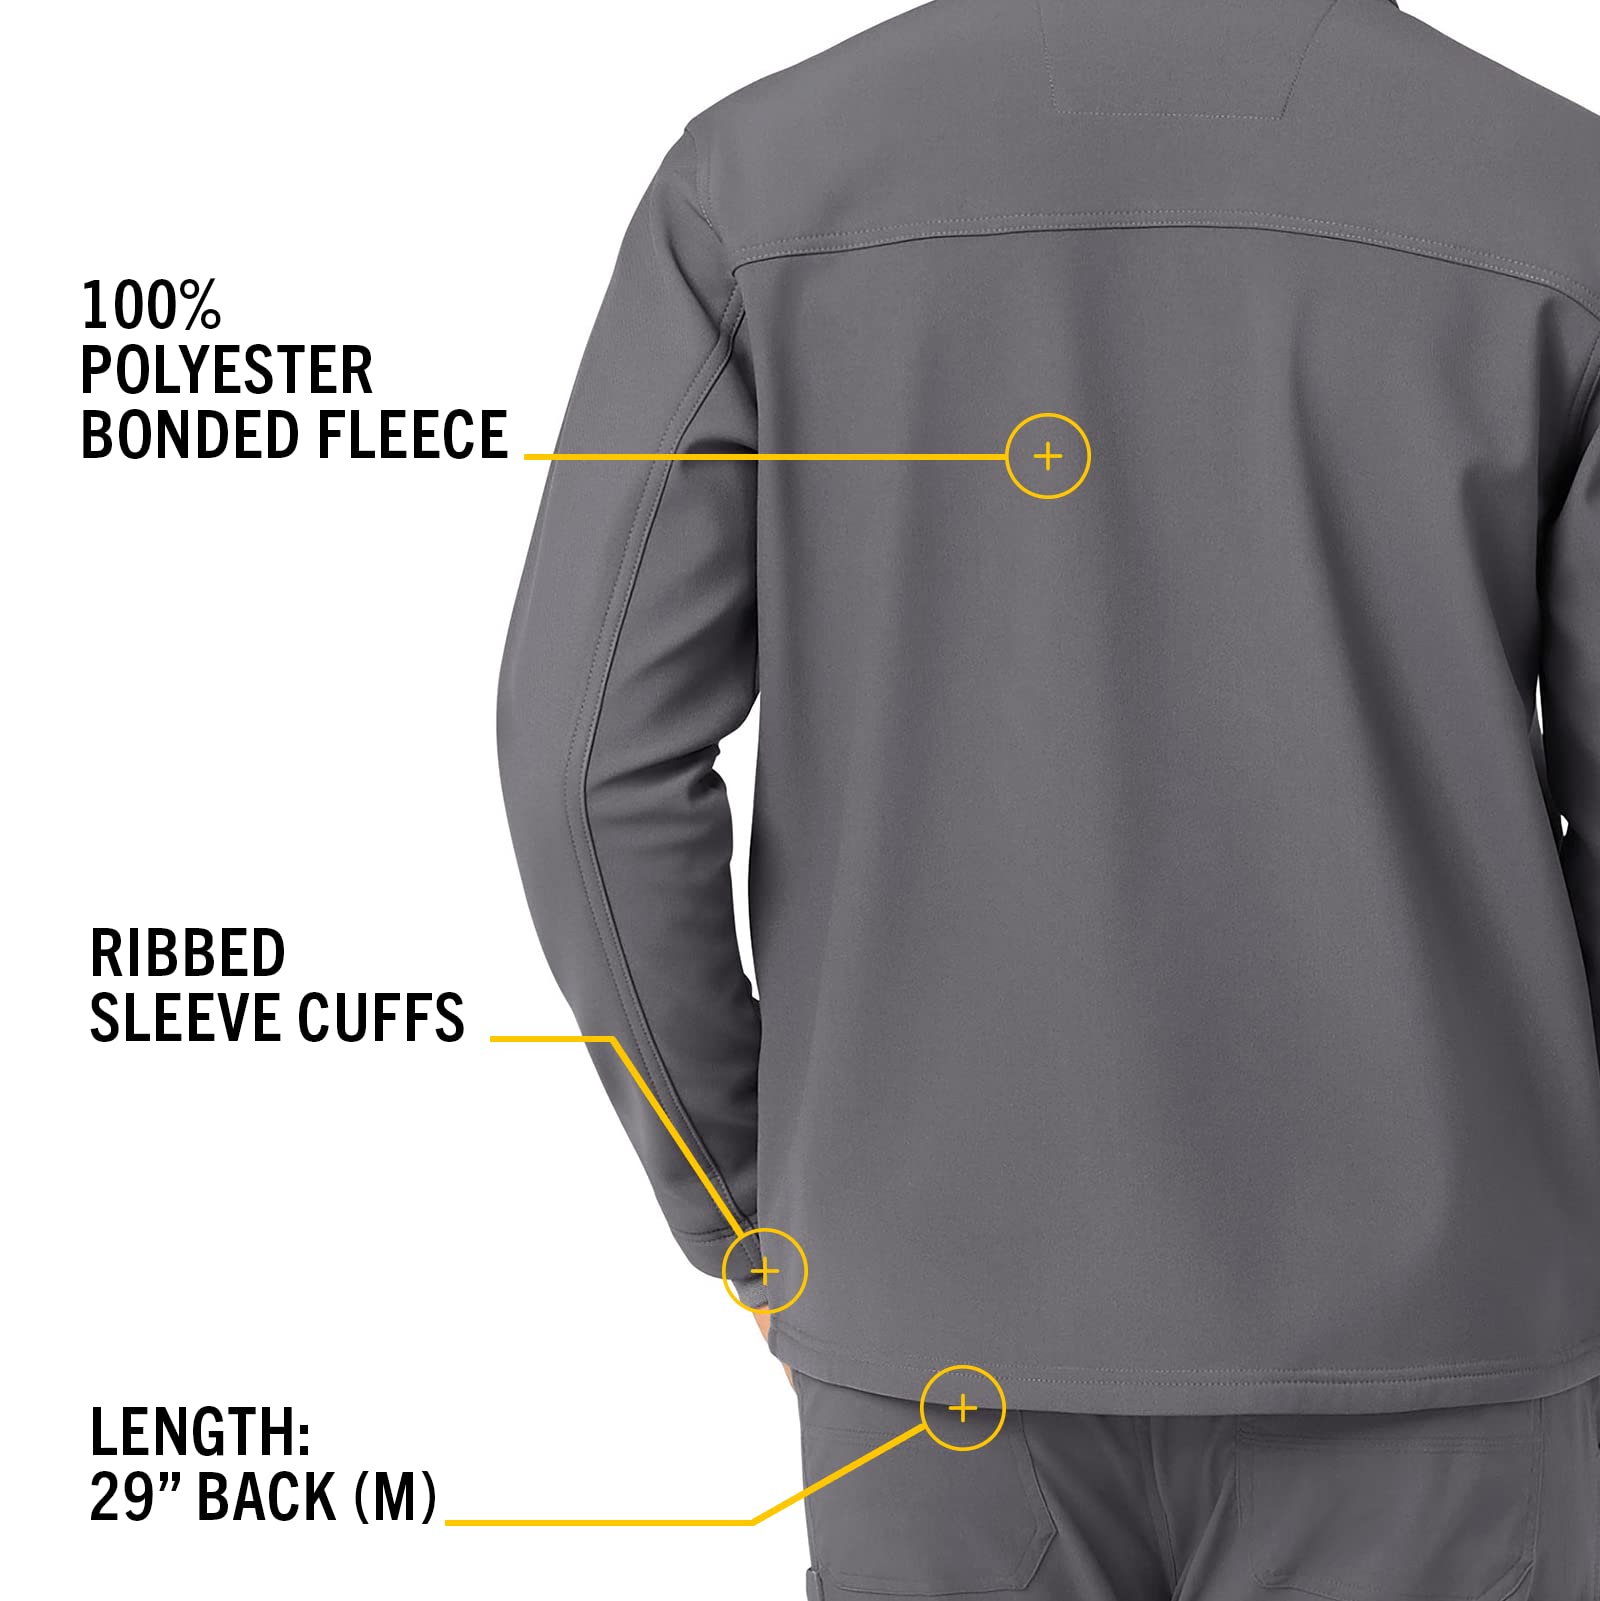 Carhartt Men's Rugged Flex Modern Fit Fluid Resistant Bonded Fleece Jacket